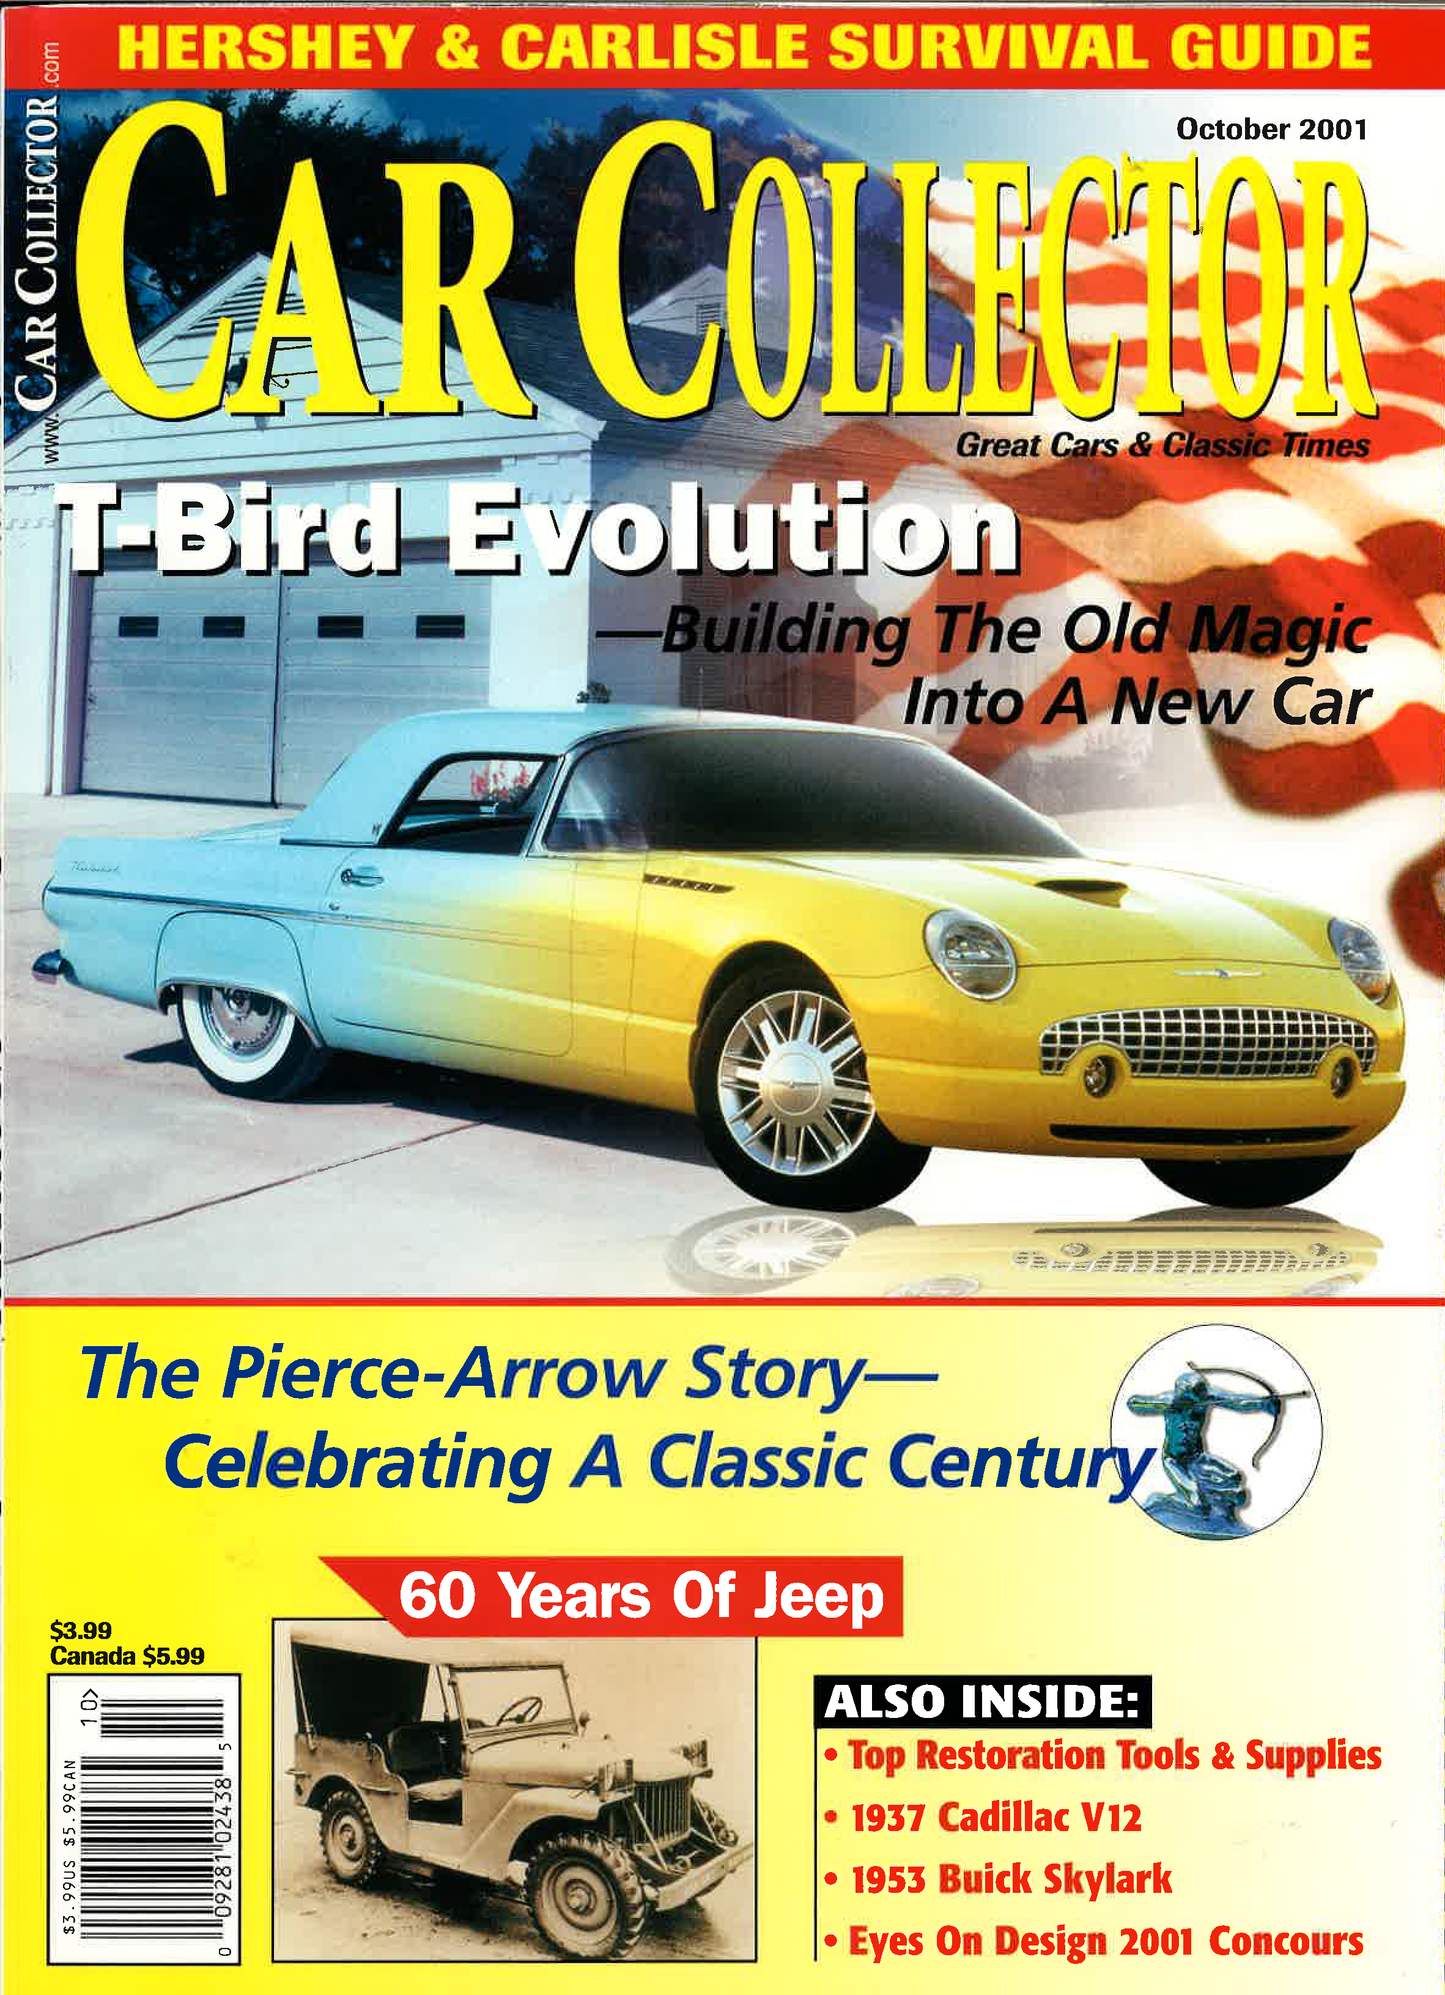 The Pierce-Arrow Story-Car Collector Magazine, October 2001